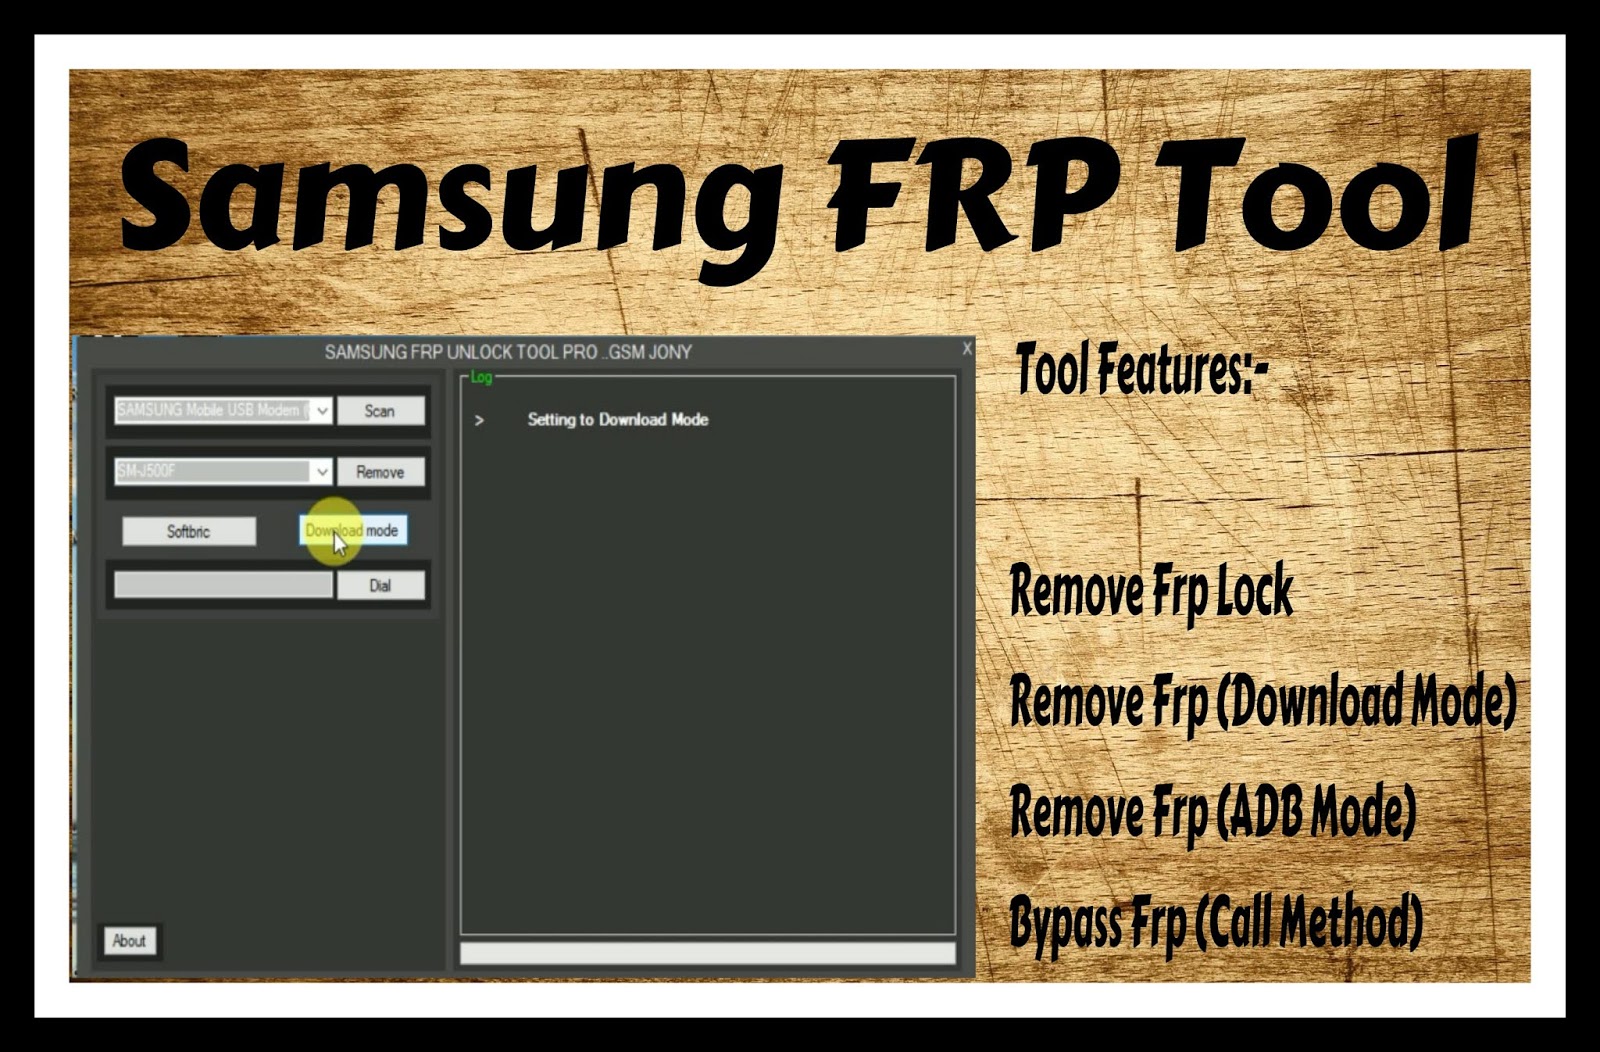 download samsung frp unlock tool pro gsm jony